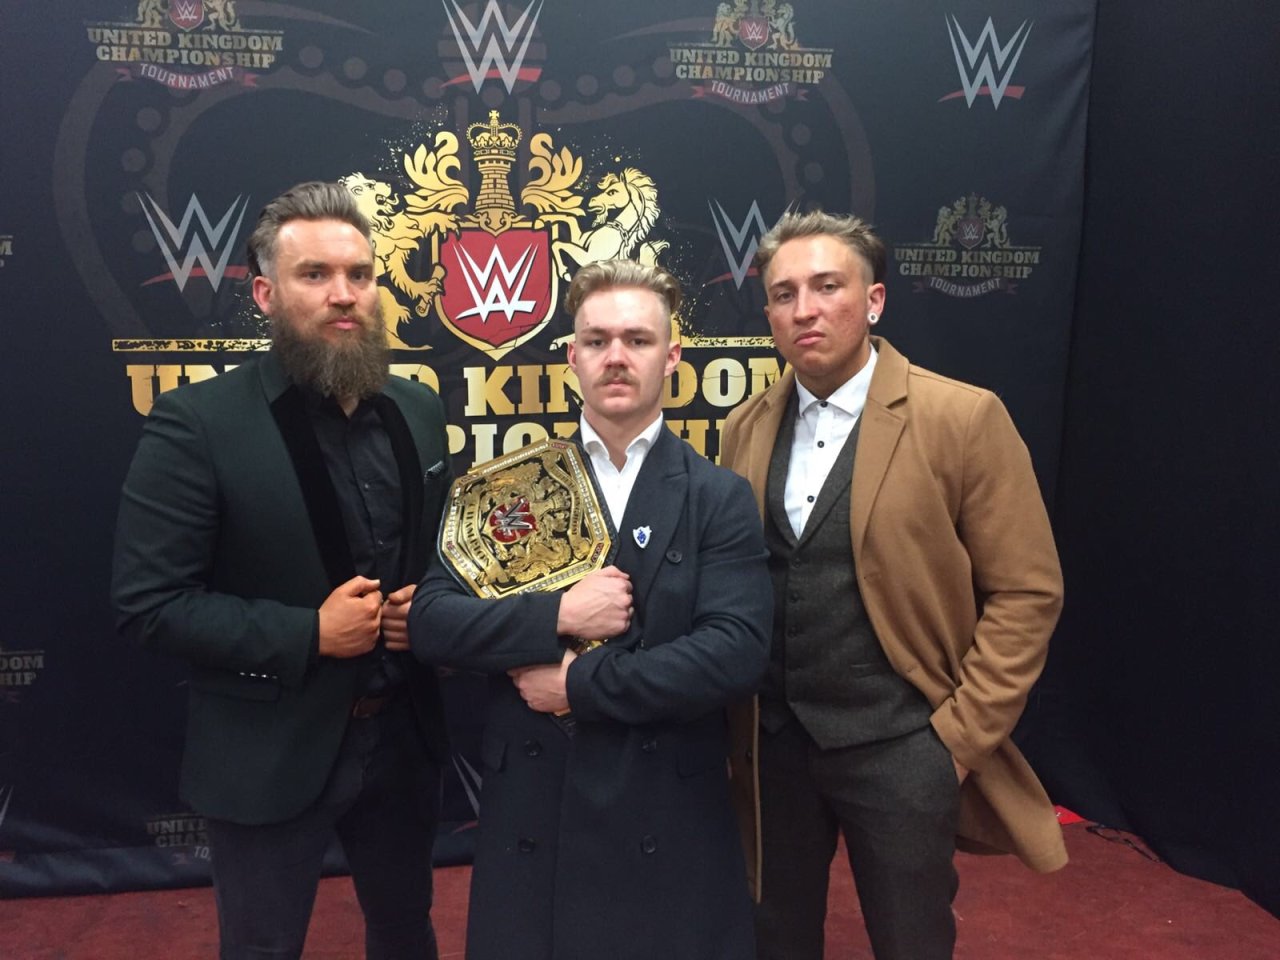 Участники WWE UK Tournament сняты с шоу в Германии